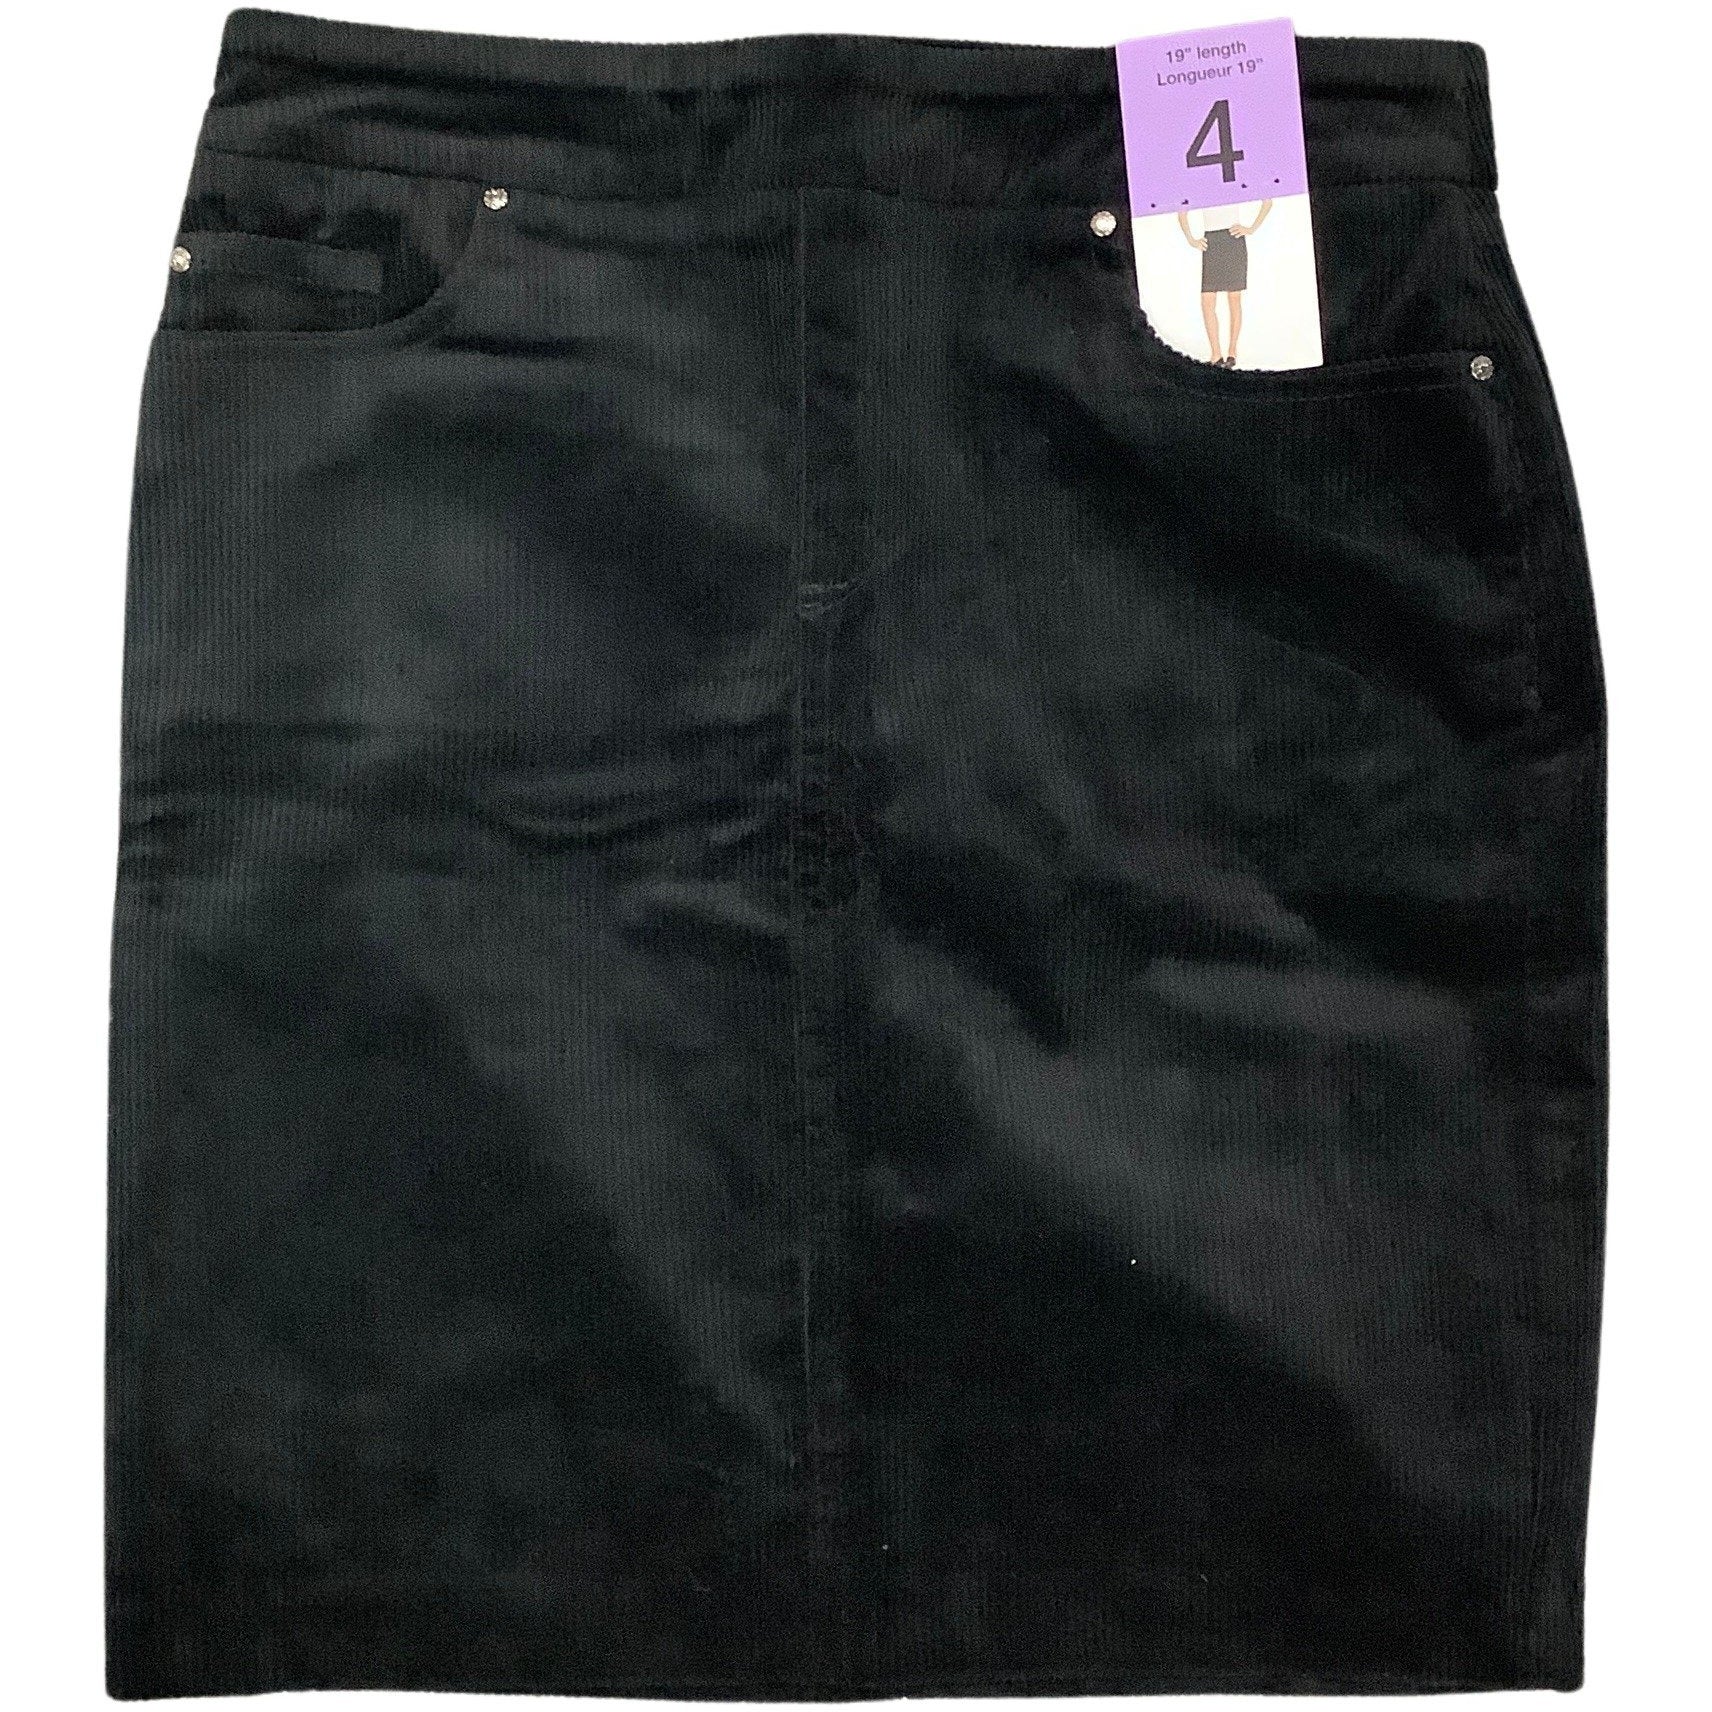 S.C & Co. Women's Corduroy Skirt / Black / Various Sizes